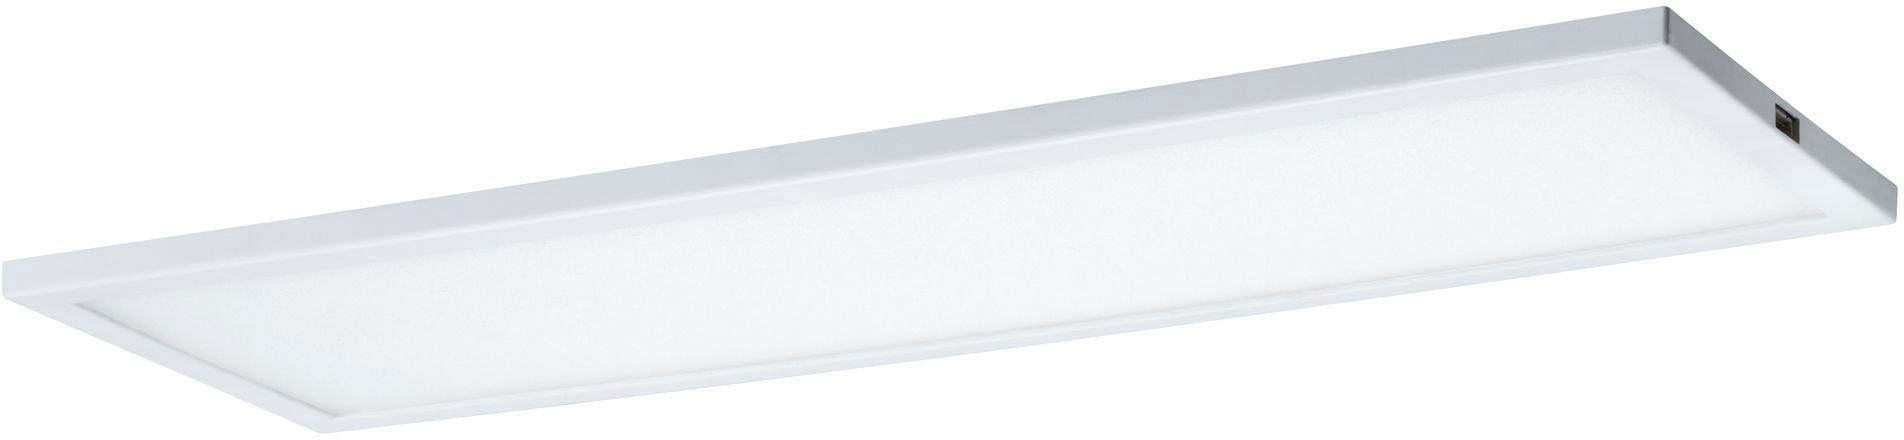 Unterschrankleuchte fest Warmweiß, LED 10x30cm Ace 10x30cm Weiß Erweiterung LED Weiß Ace Erweiterung, Panel 7,5W Paulmann integriert, Panel LED 7,5W